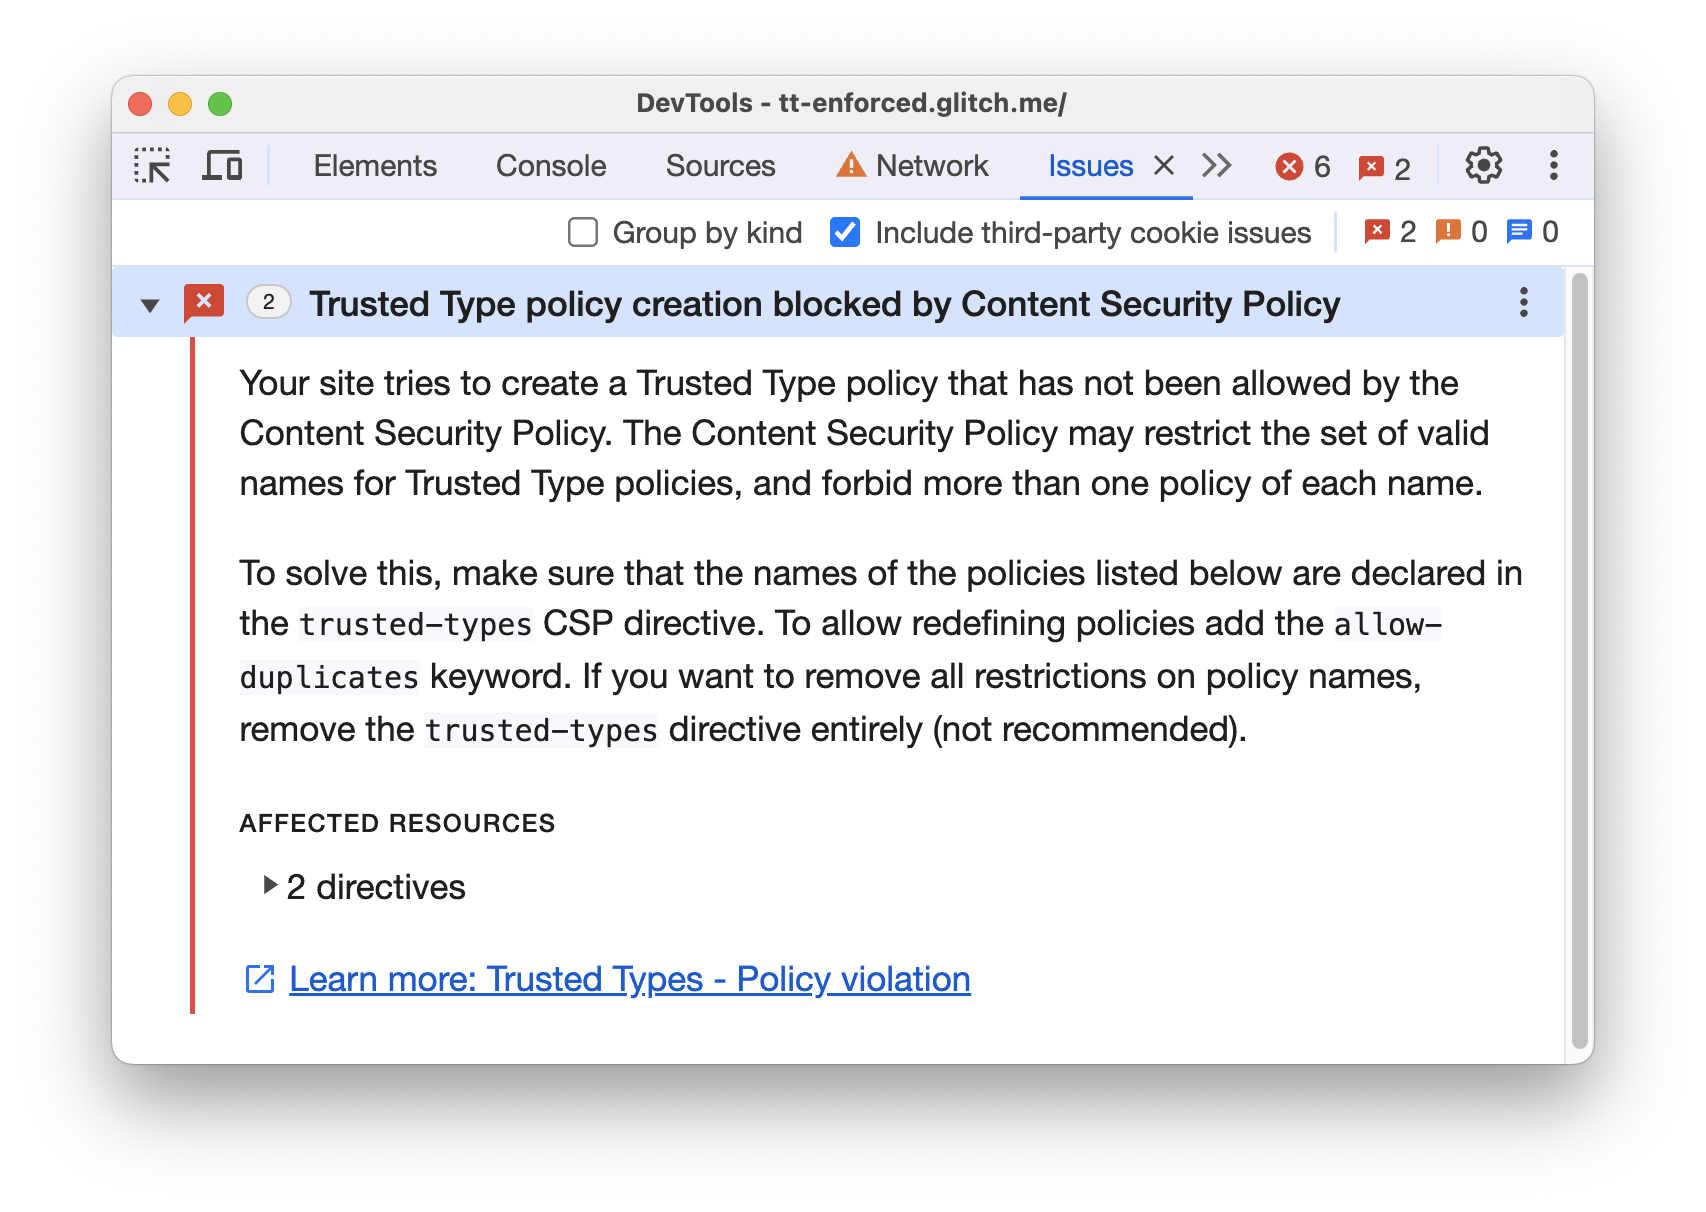 Application 패널의 Content Security Policy(콘텐츠 보안 정책)